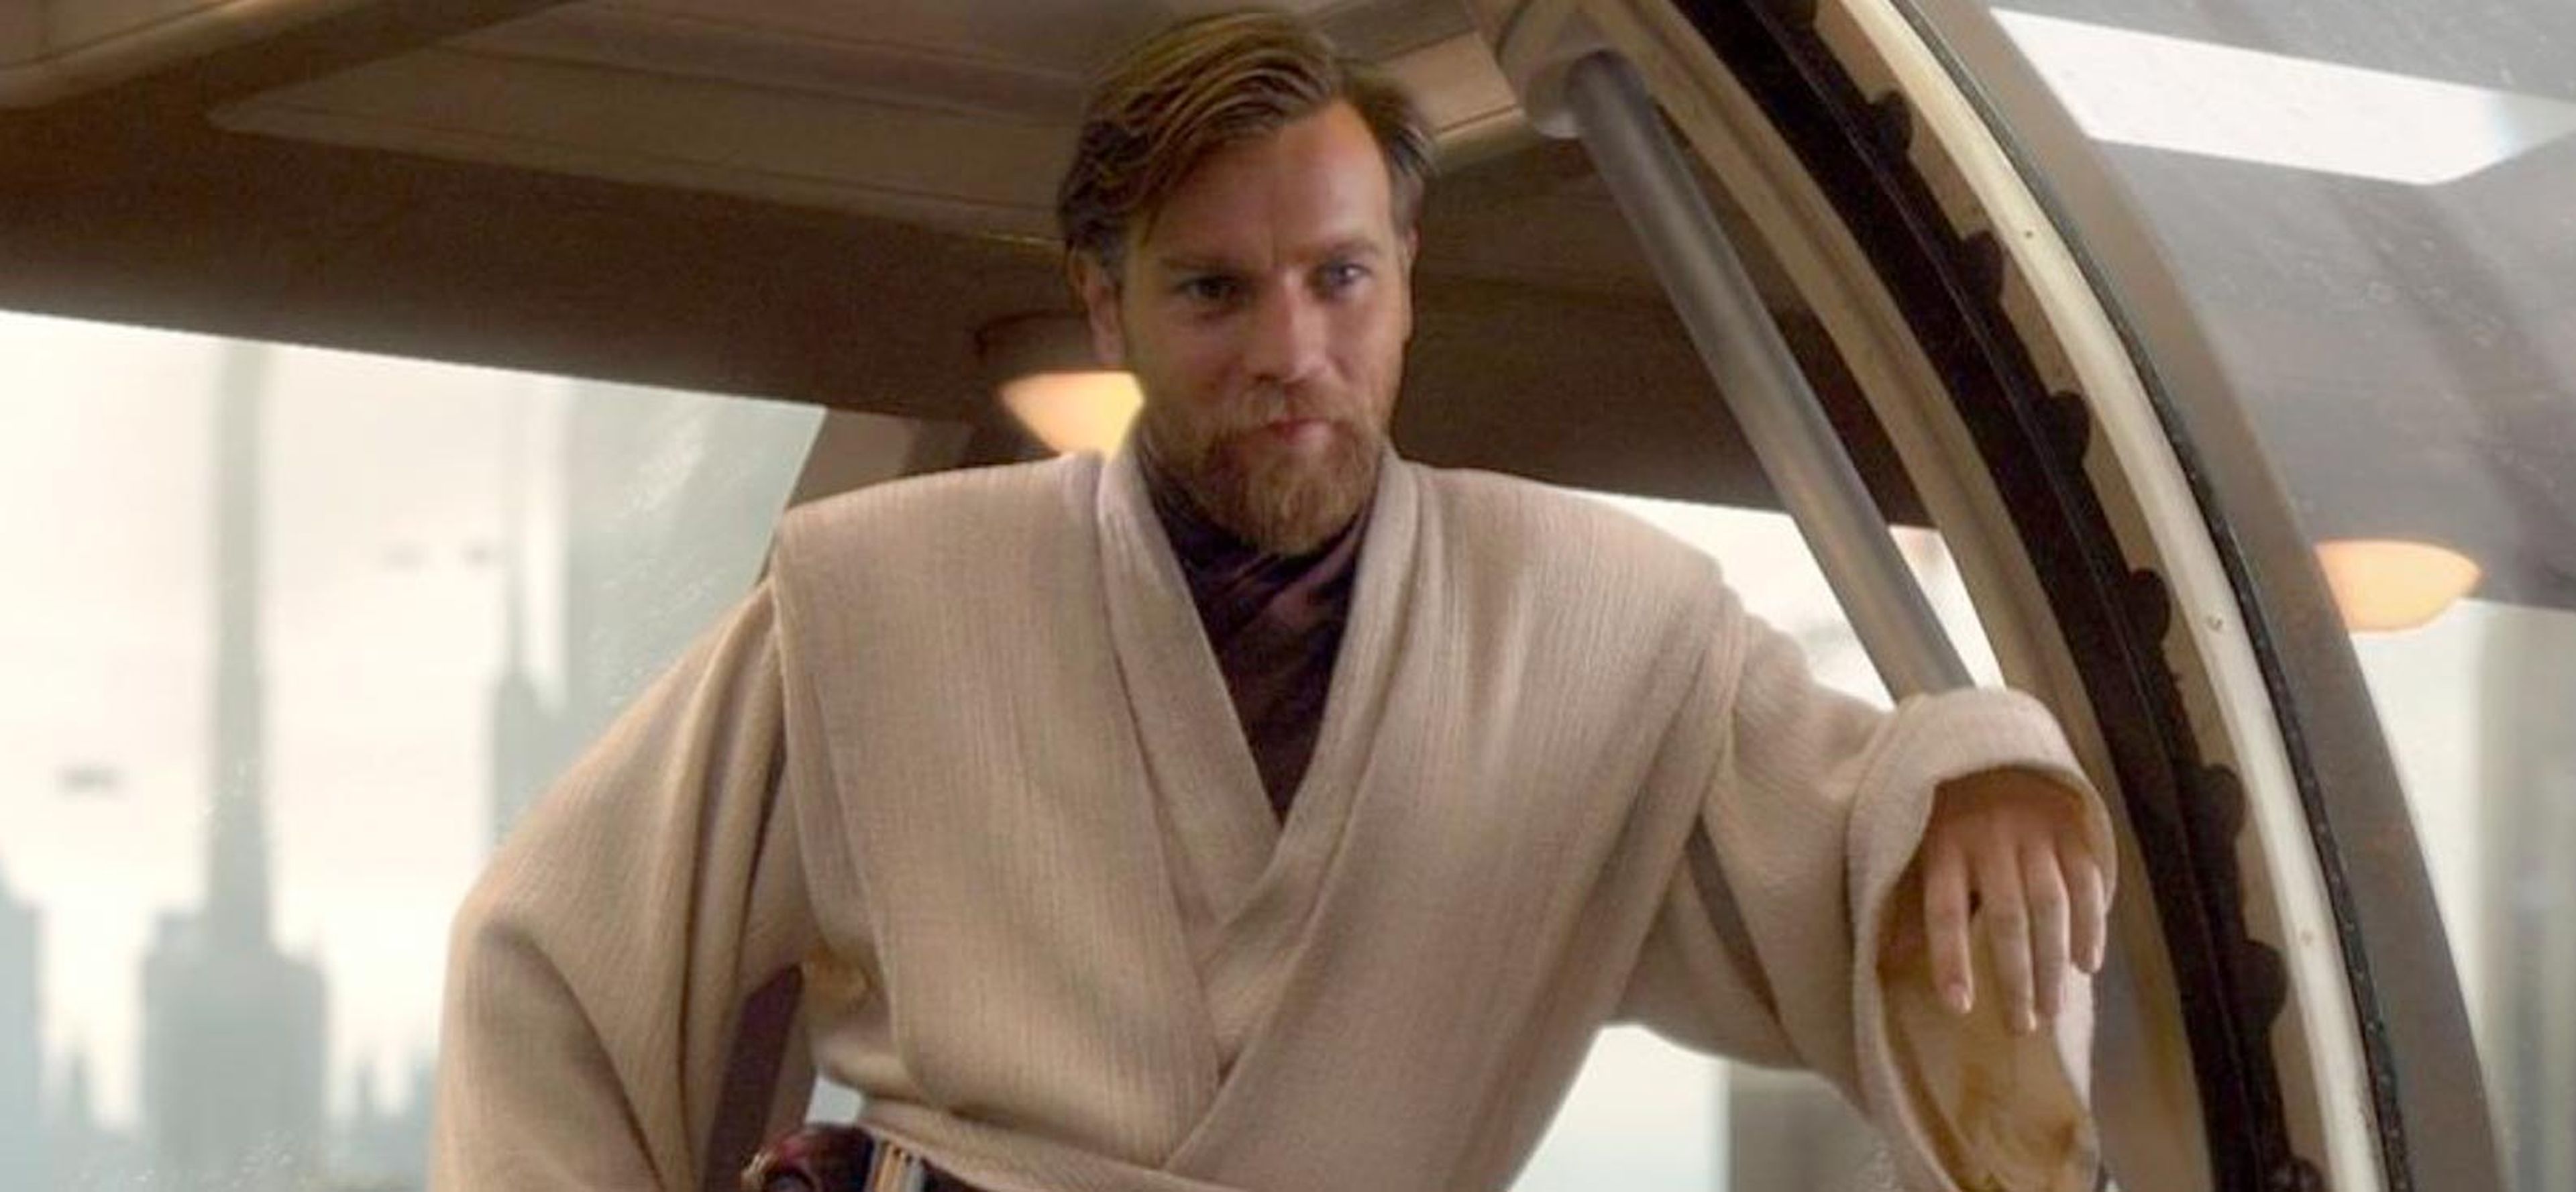 Obi-Wan Kenobi - Star Wars